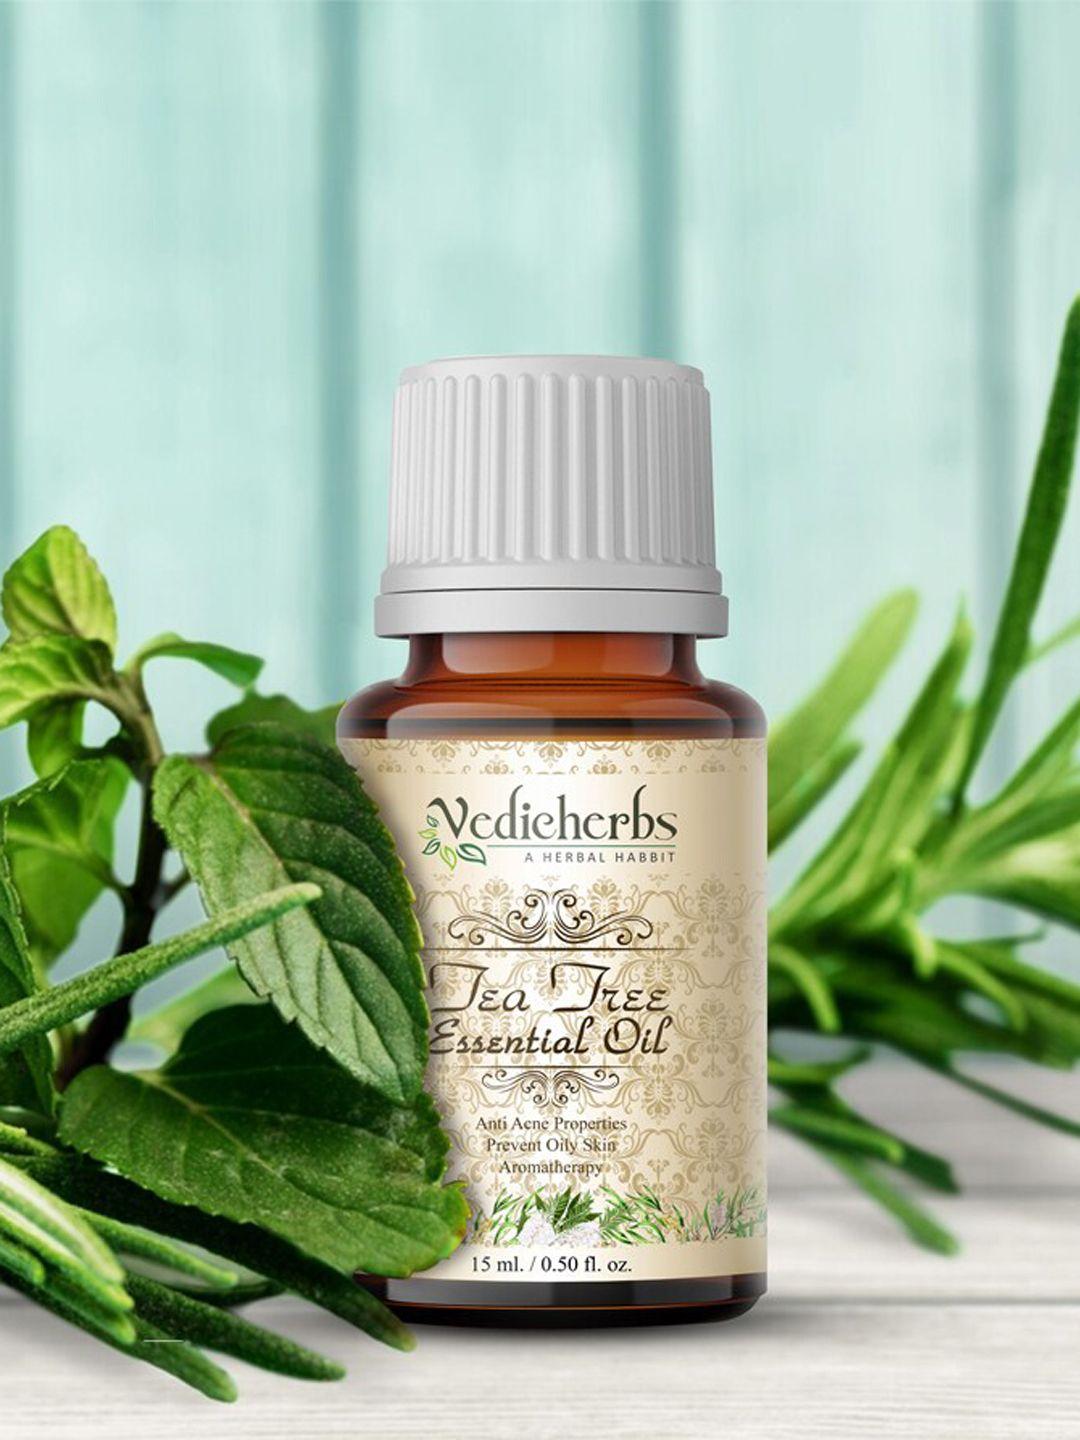 vedicherbs tea tree essential oil for anti acne & aromatherapy - 15ml